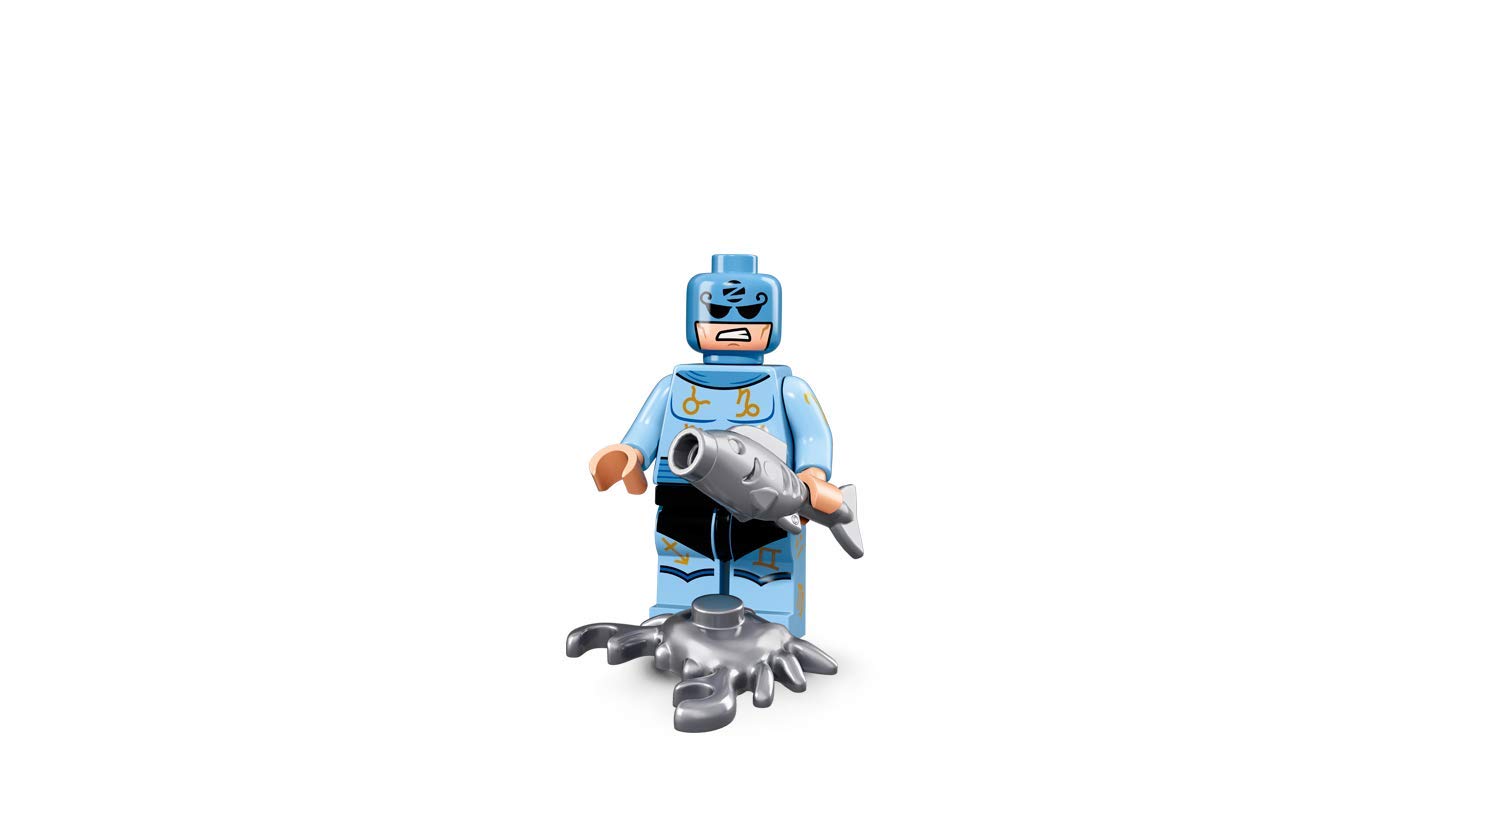 Lego The Movie Zodiak Batman Master Minif Igure – 71017 (Bagged)